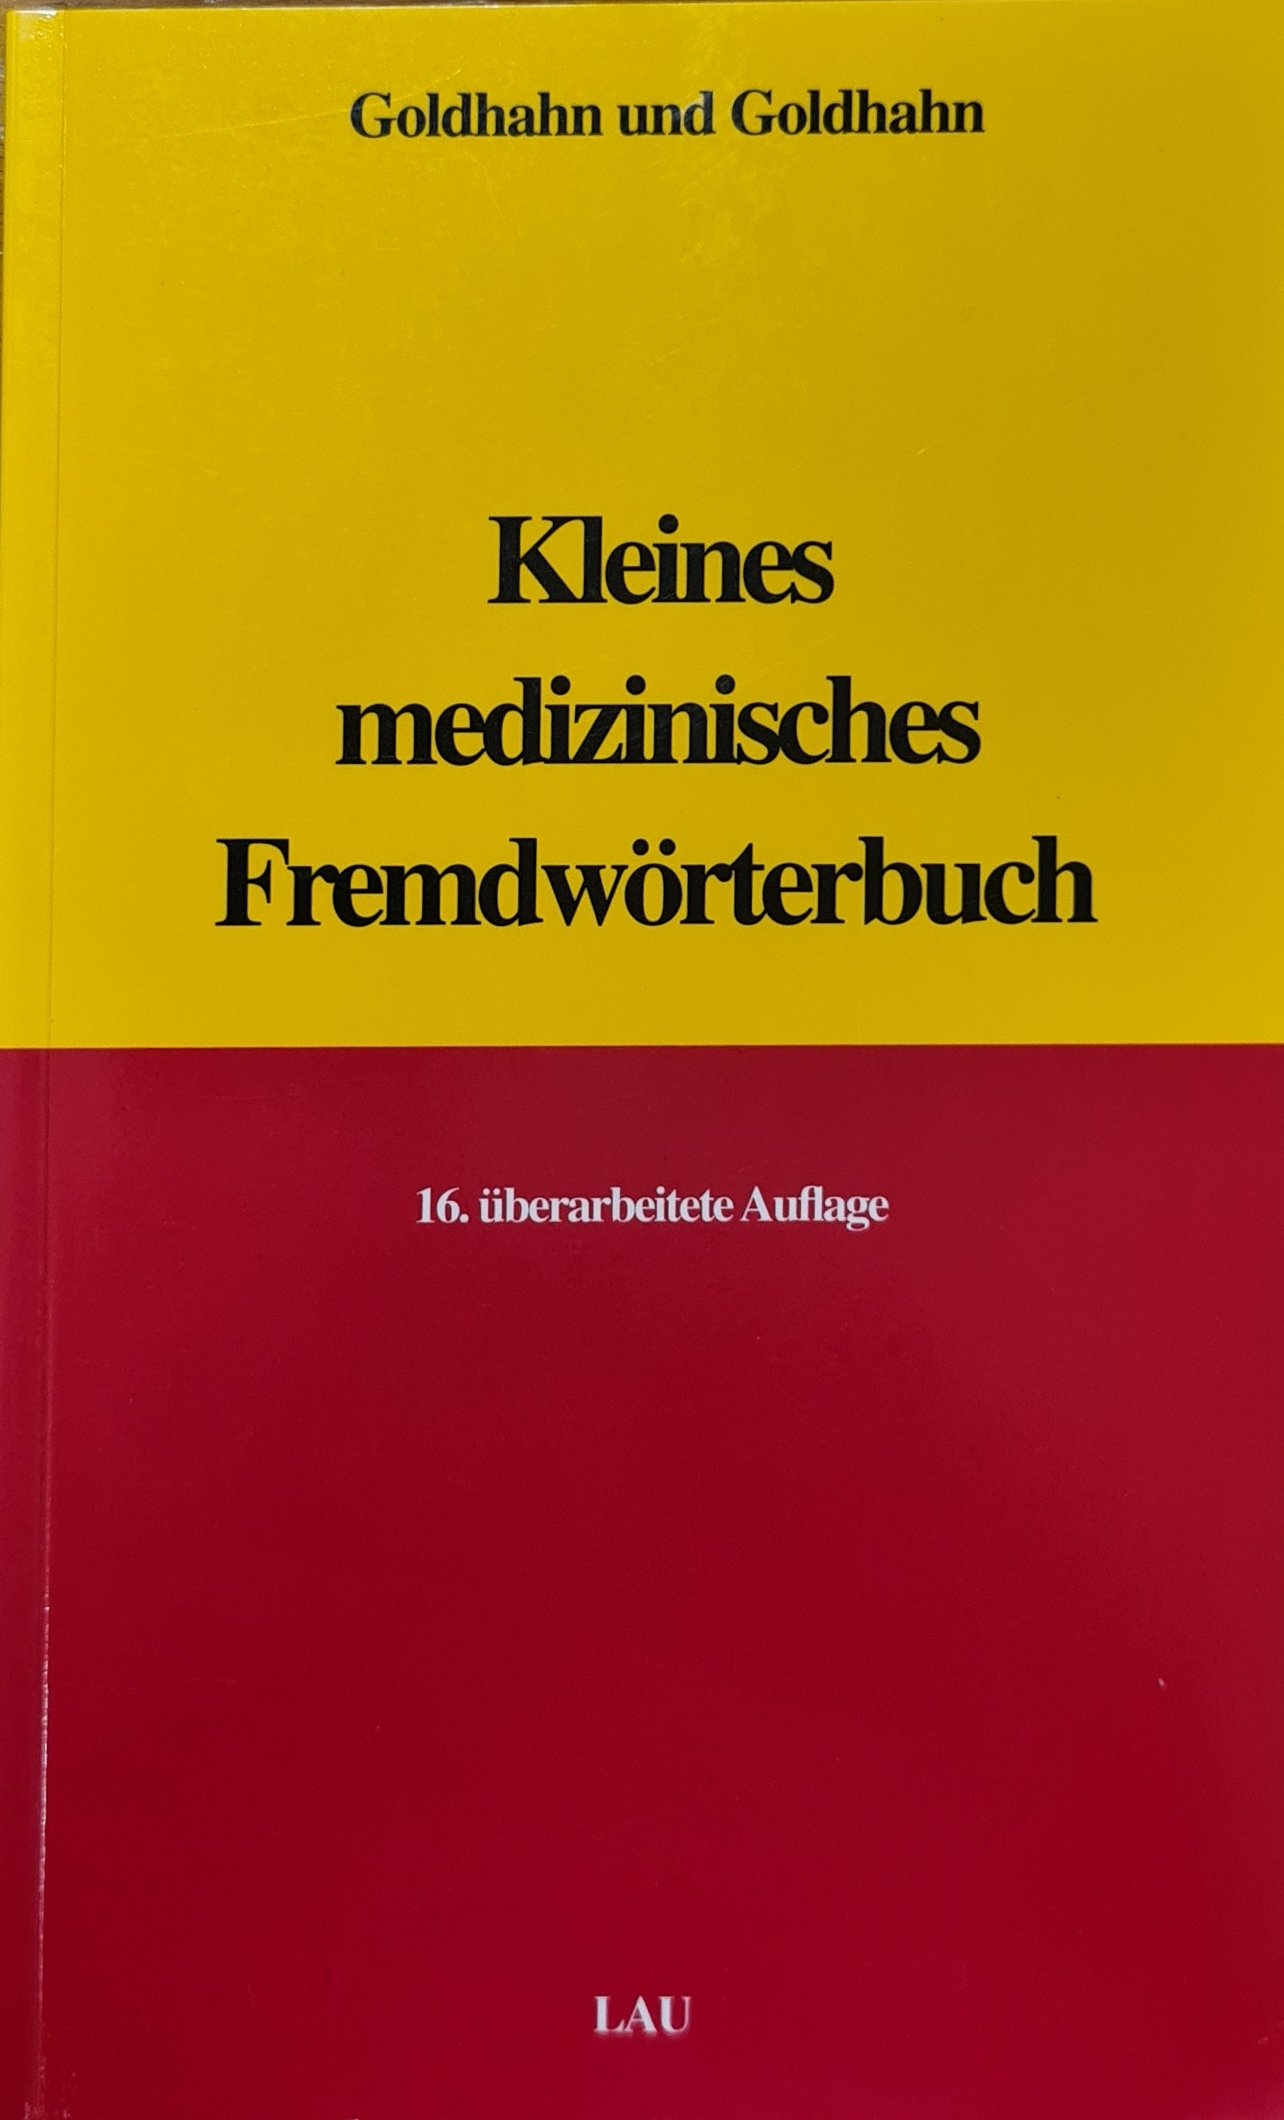 Kleines medizinisches Fremdwörterbuch (Krankenhausmuseum Bielefeld e.V. CC BY-NC-SA)